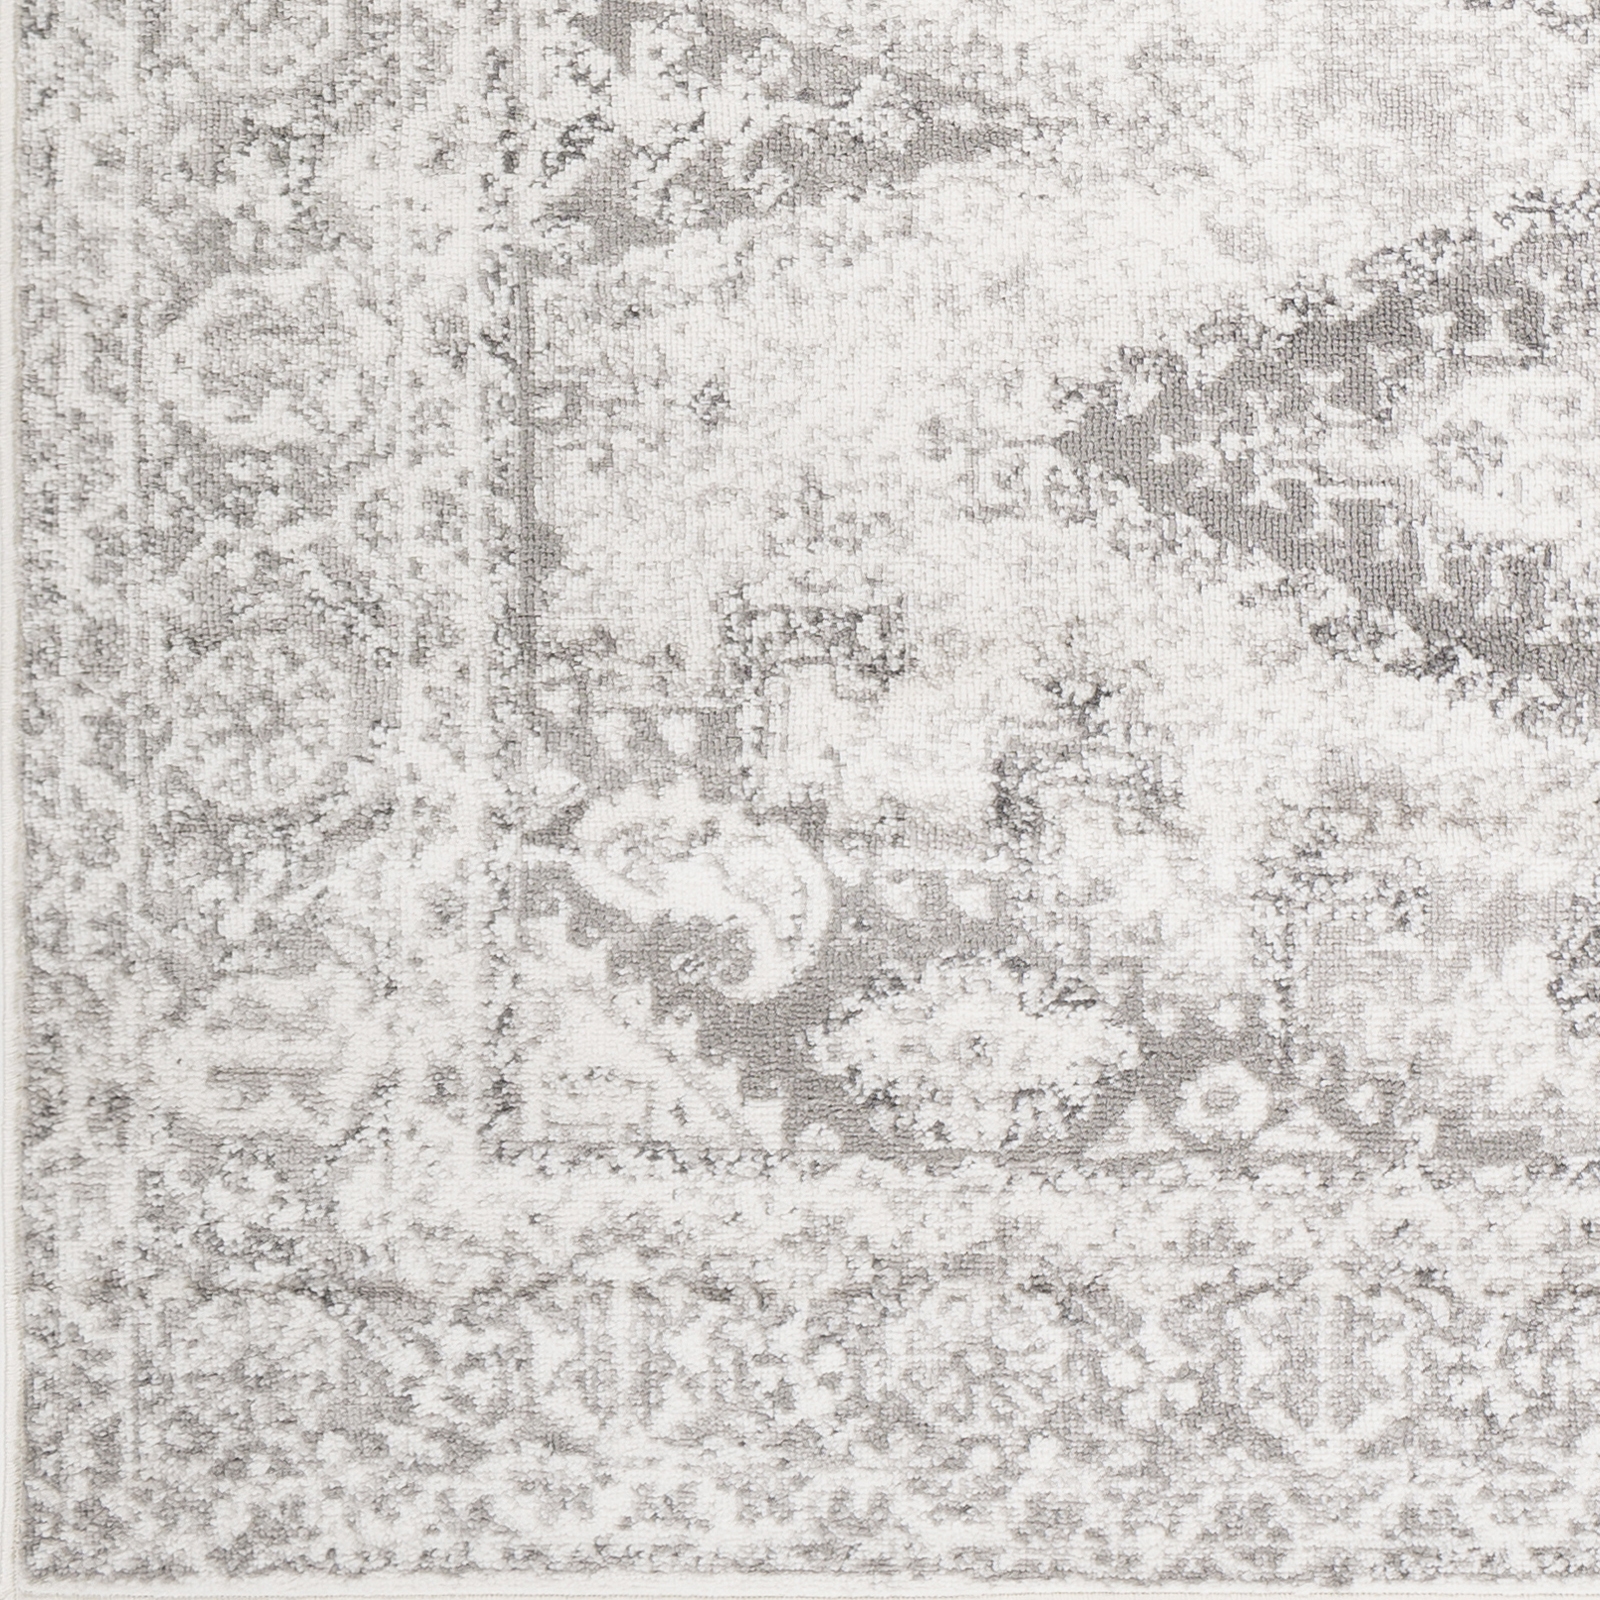 Monte Carlo Rug, Gray & White, 6'7" x 9' - Image 3